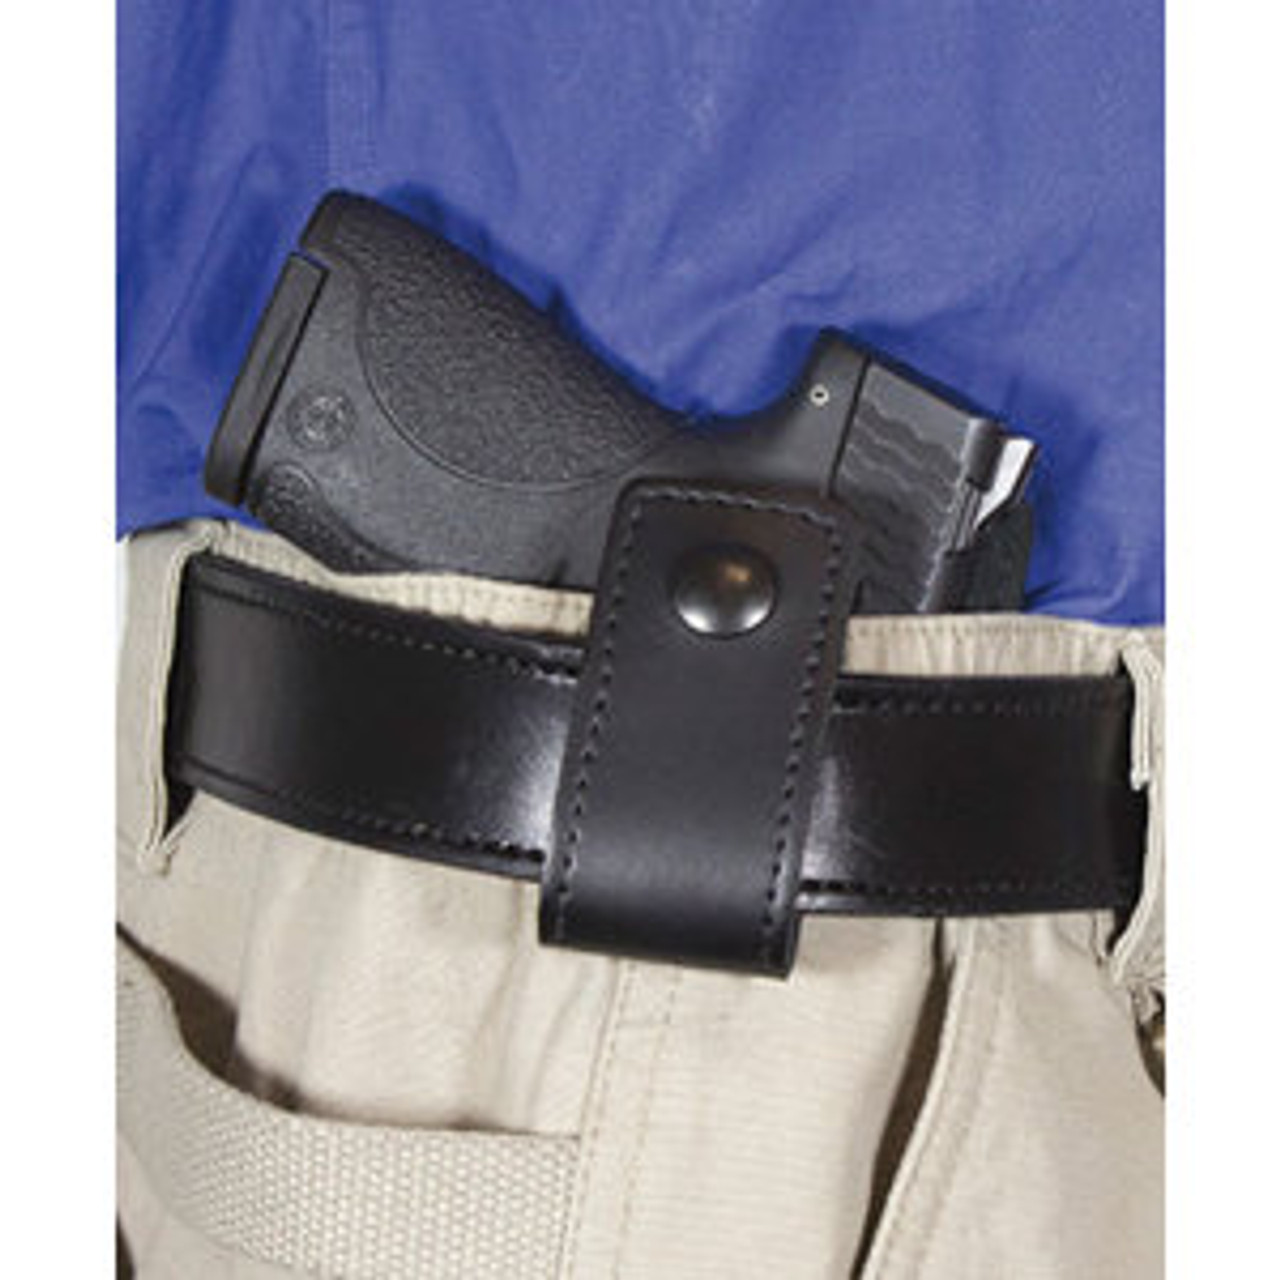 Details about   Tactical Elastic Waist Belly Band Holster Concealed Carry Hidden Gun Pistol Hot 